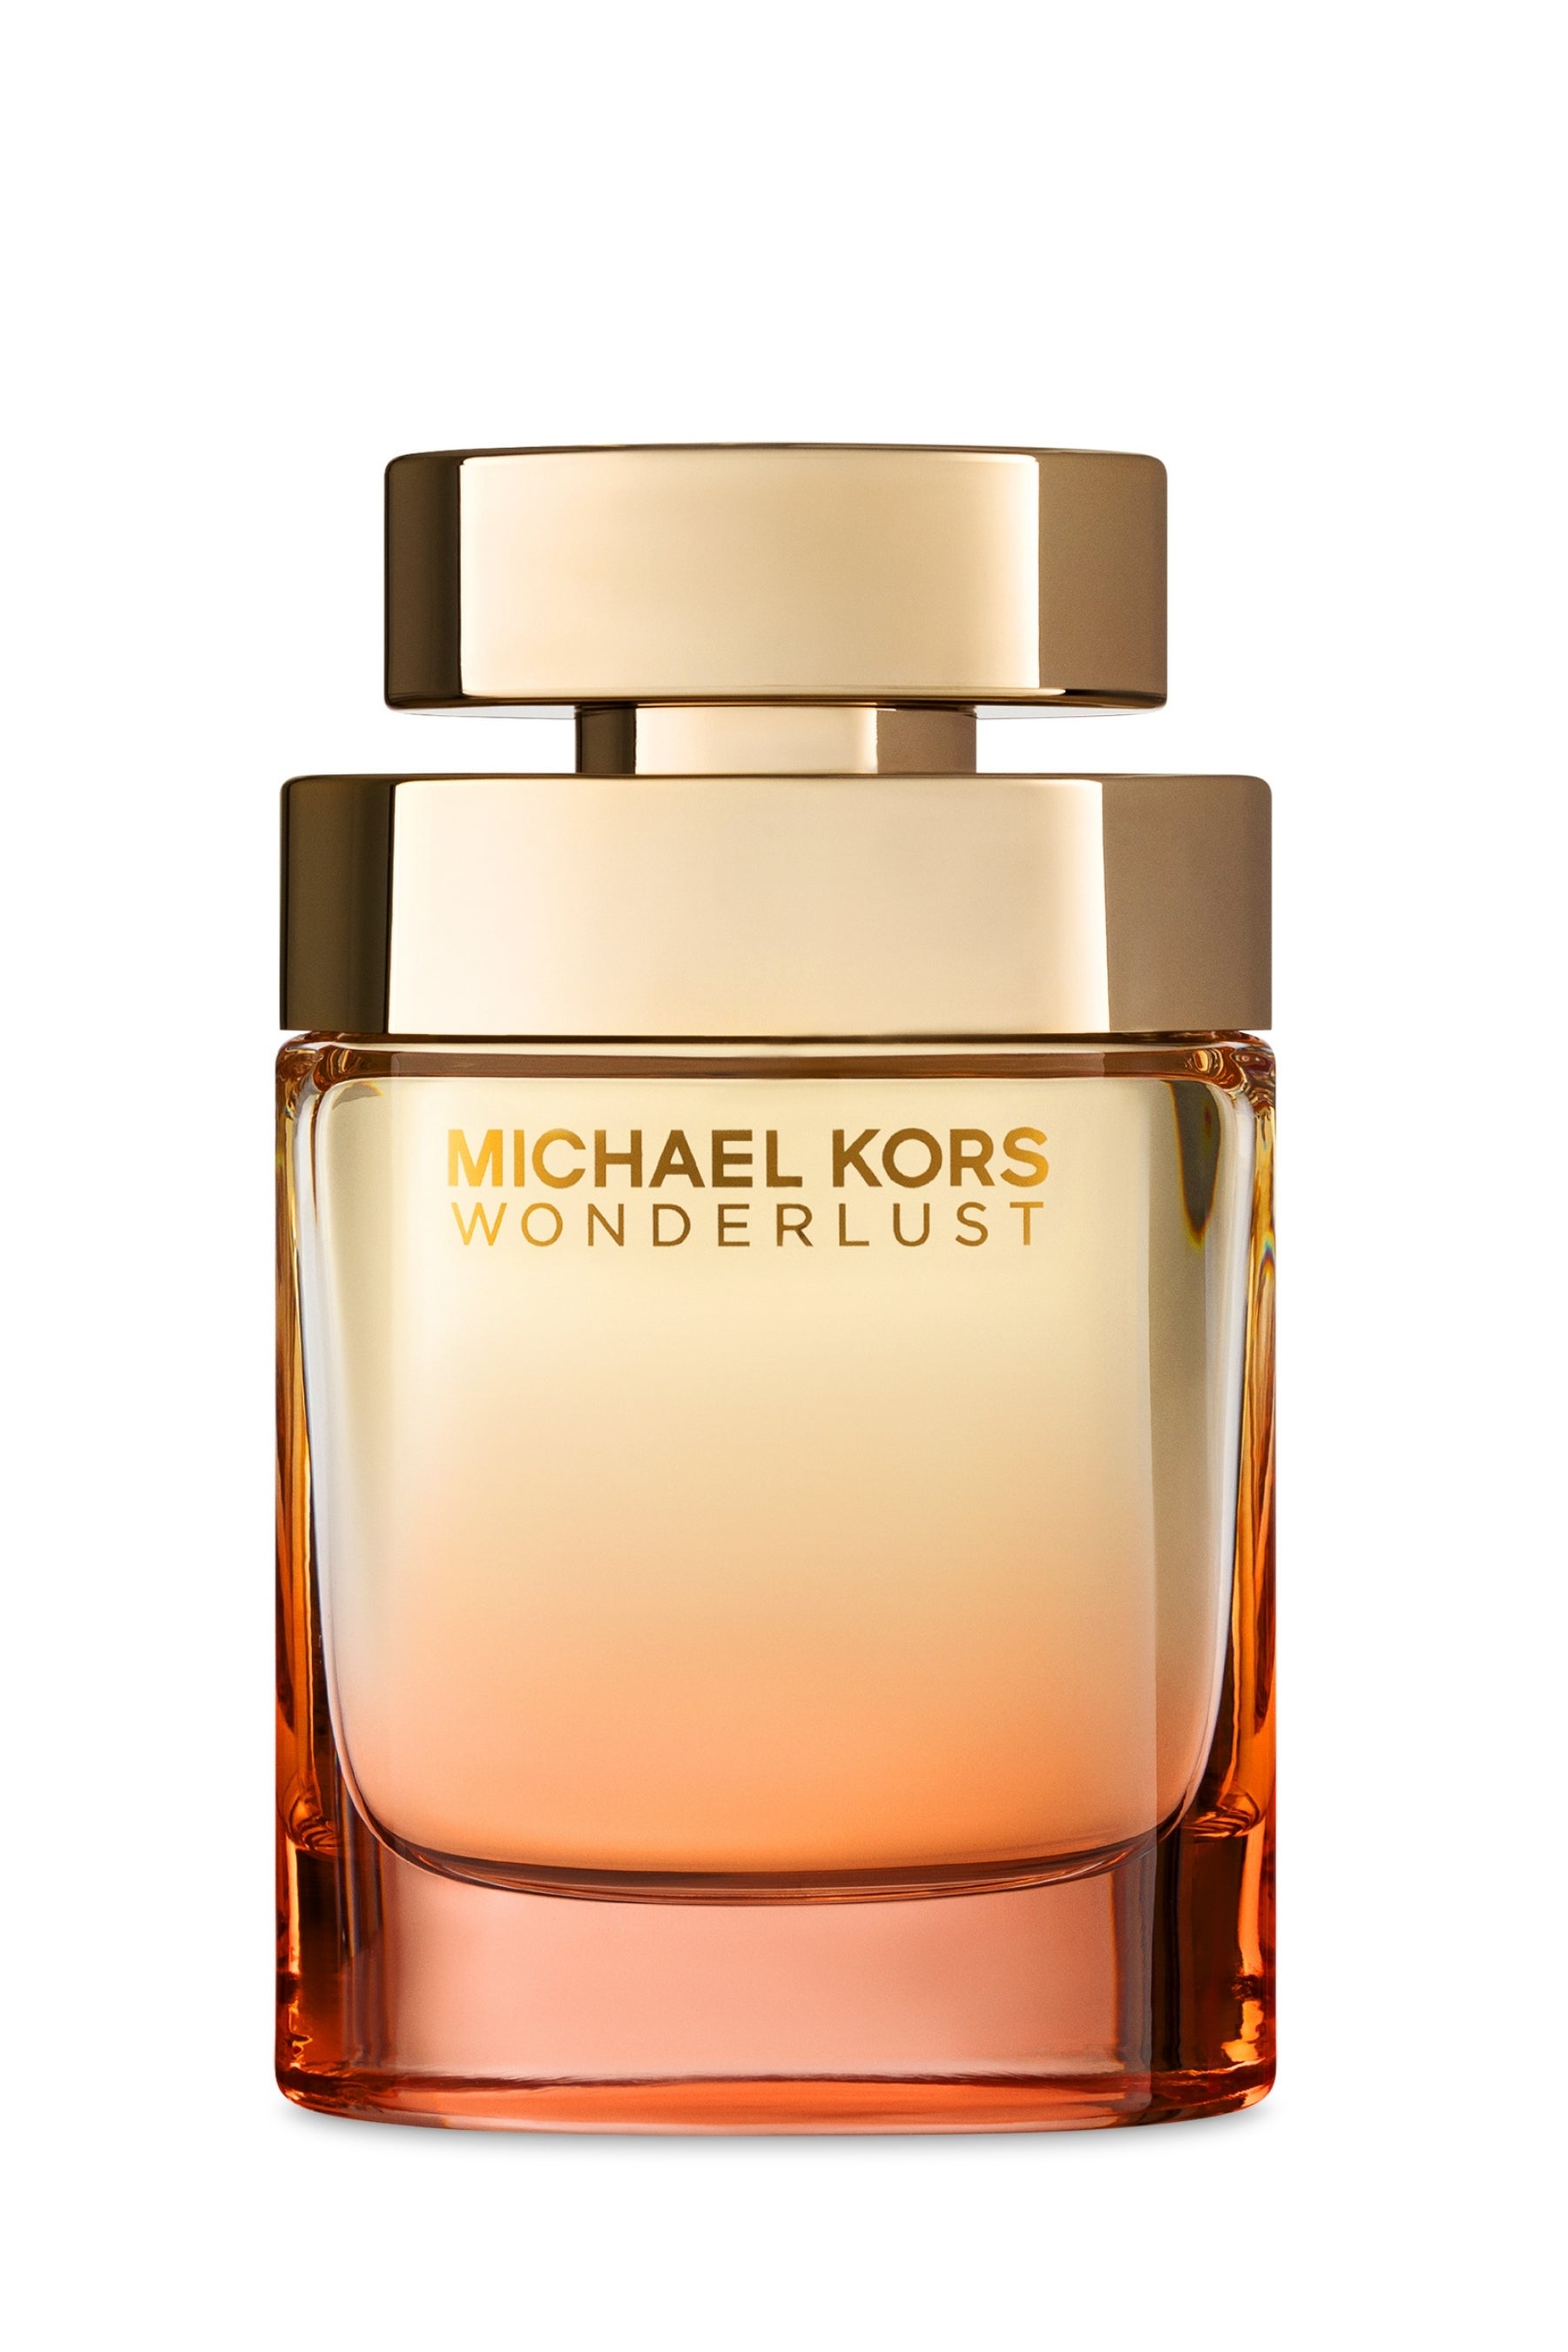 MICHAEL KORS FOR WOMEN - EAU DE PARFUM SPRAY – Fragrance Room